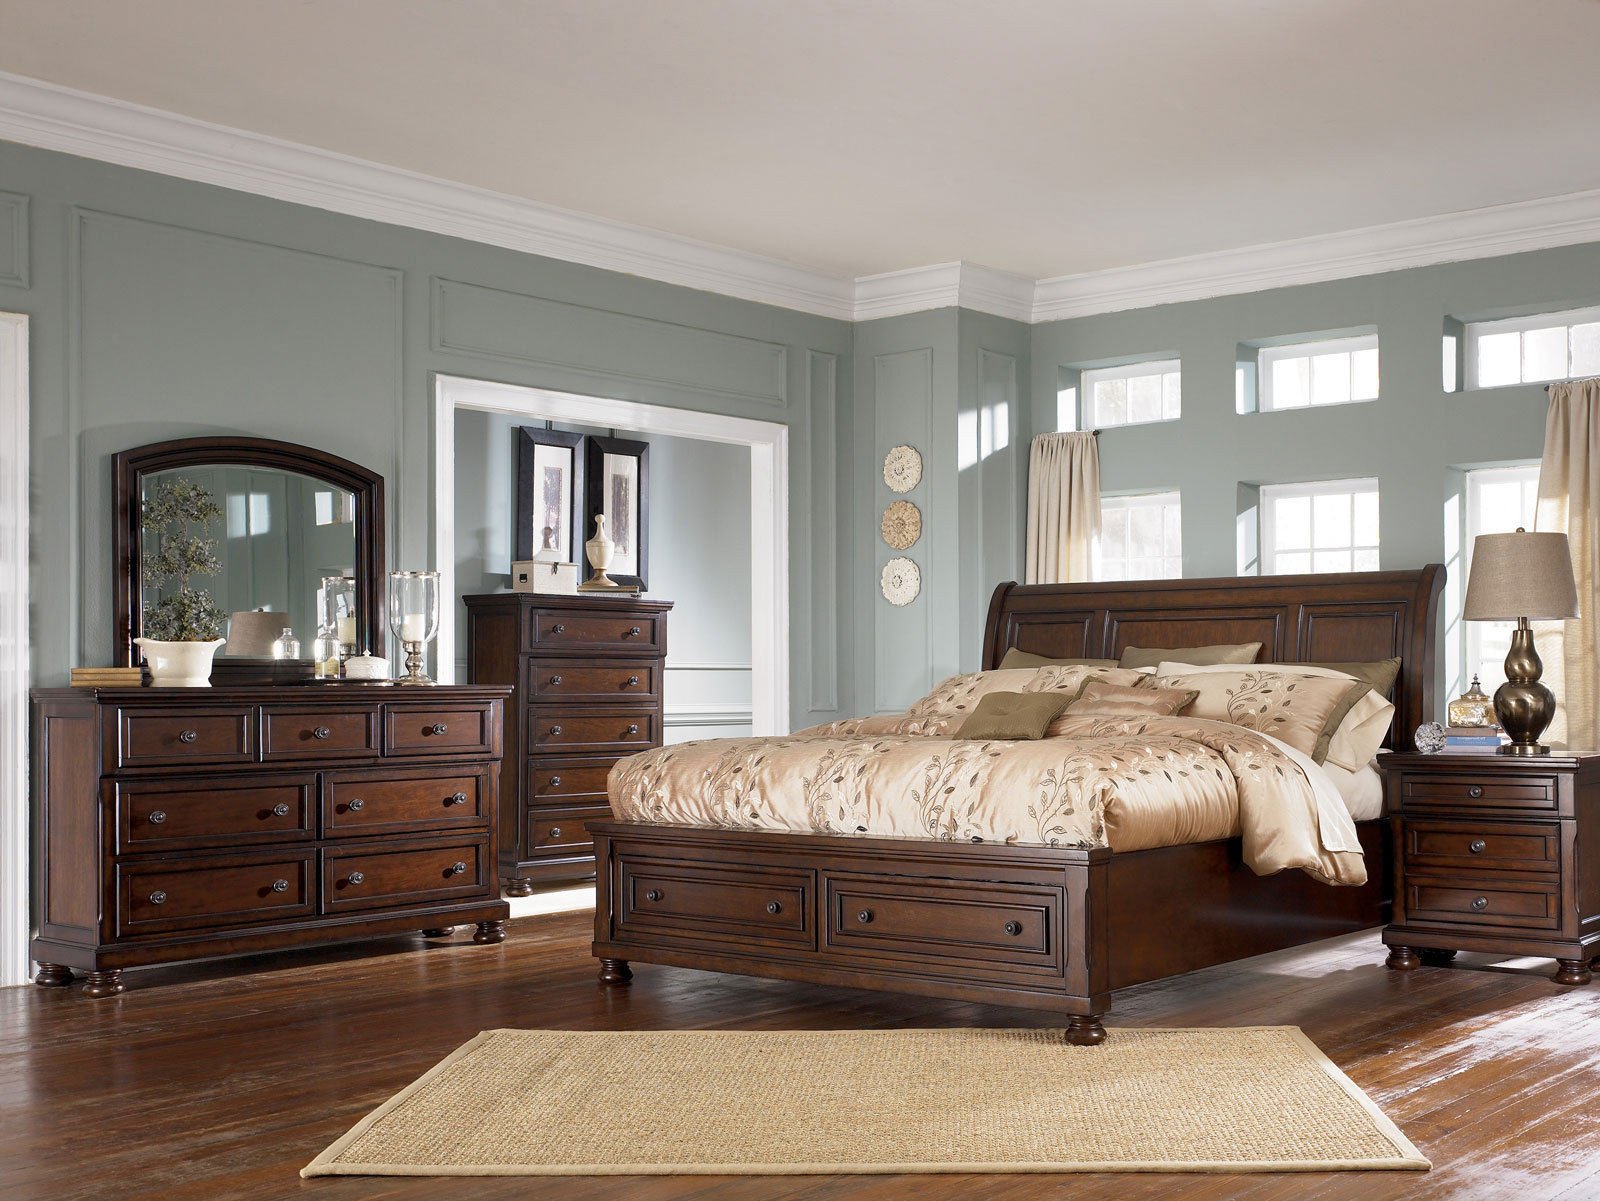 millennium furniture antique bedroom set pkb524qbedrm